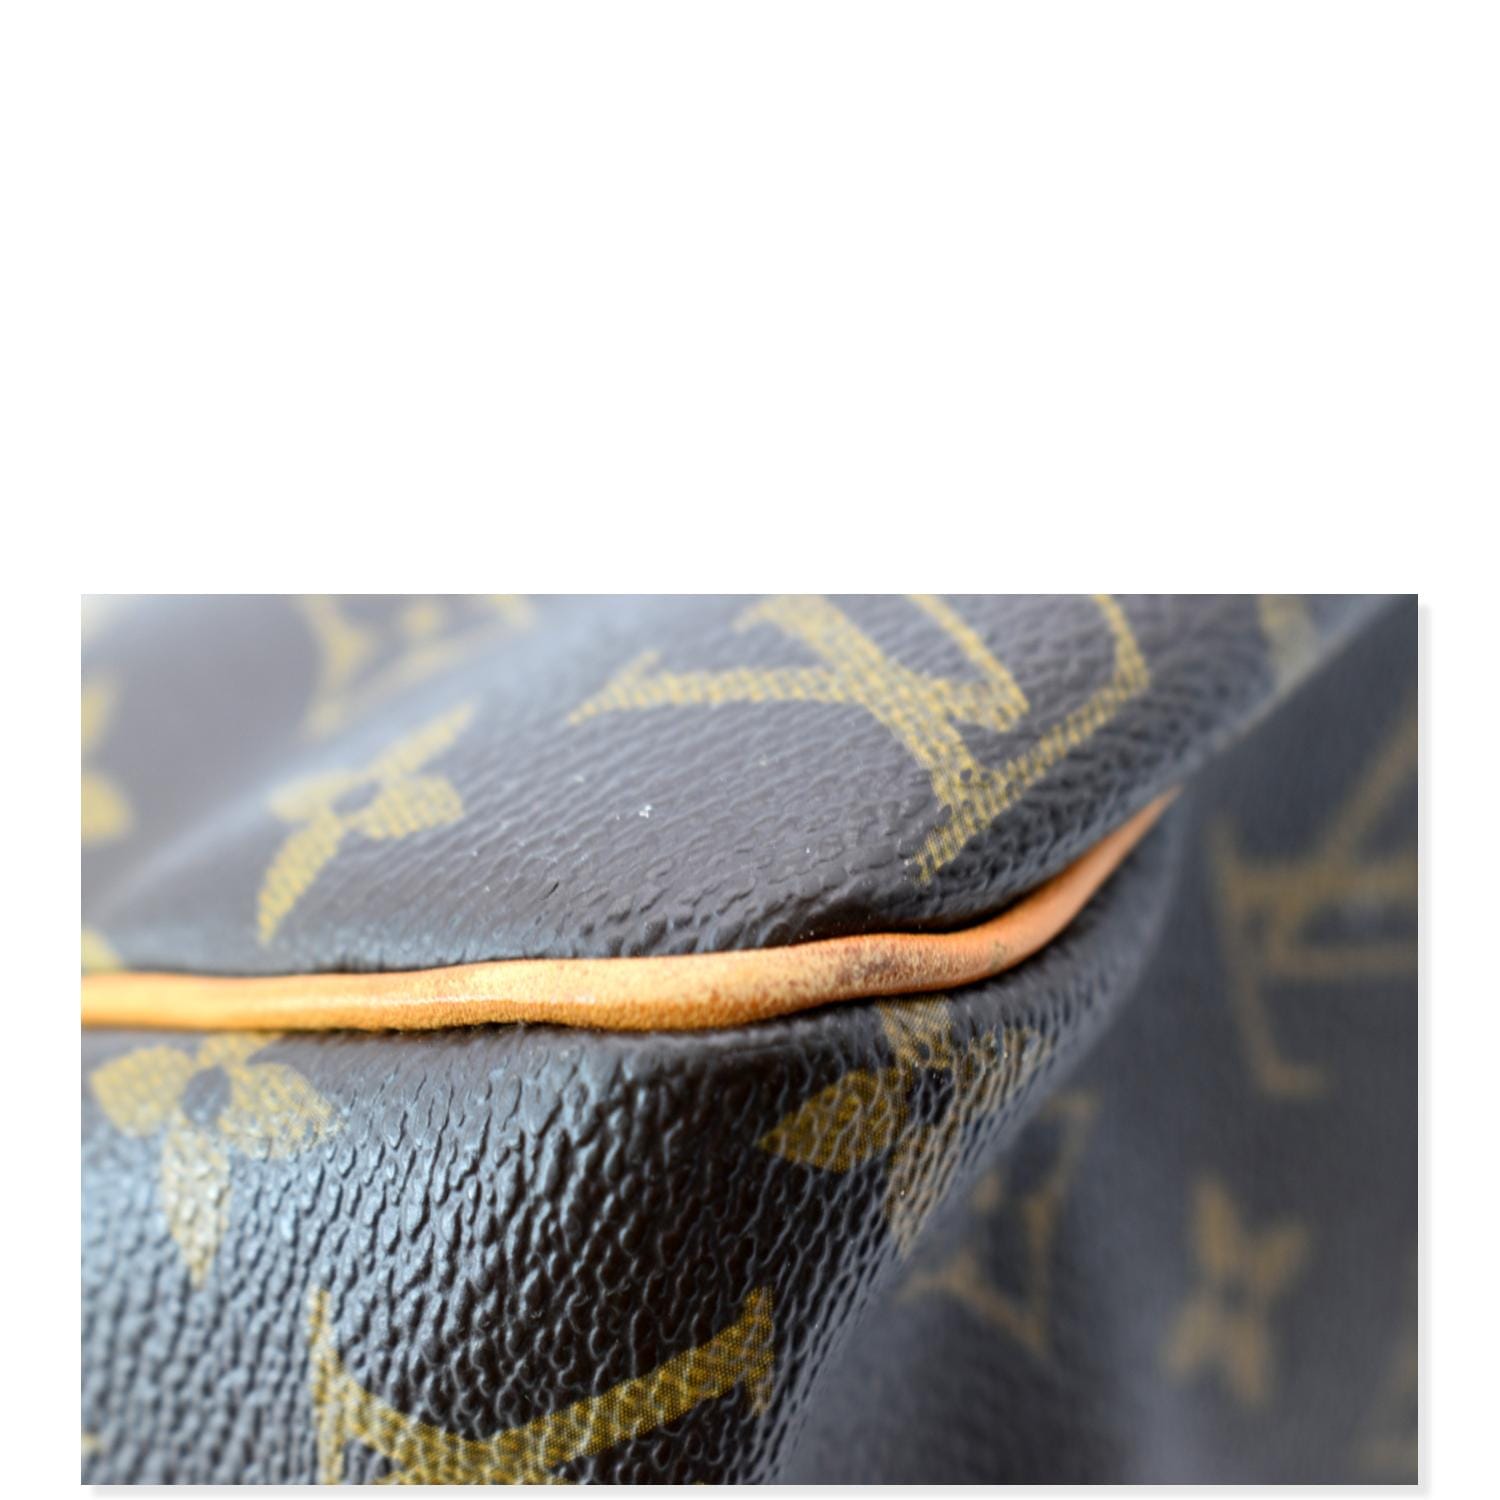 Date Code & Stamp] Louis Vuitton Batignolles Horizontal Monogram Canvas